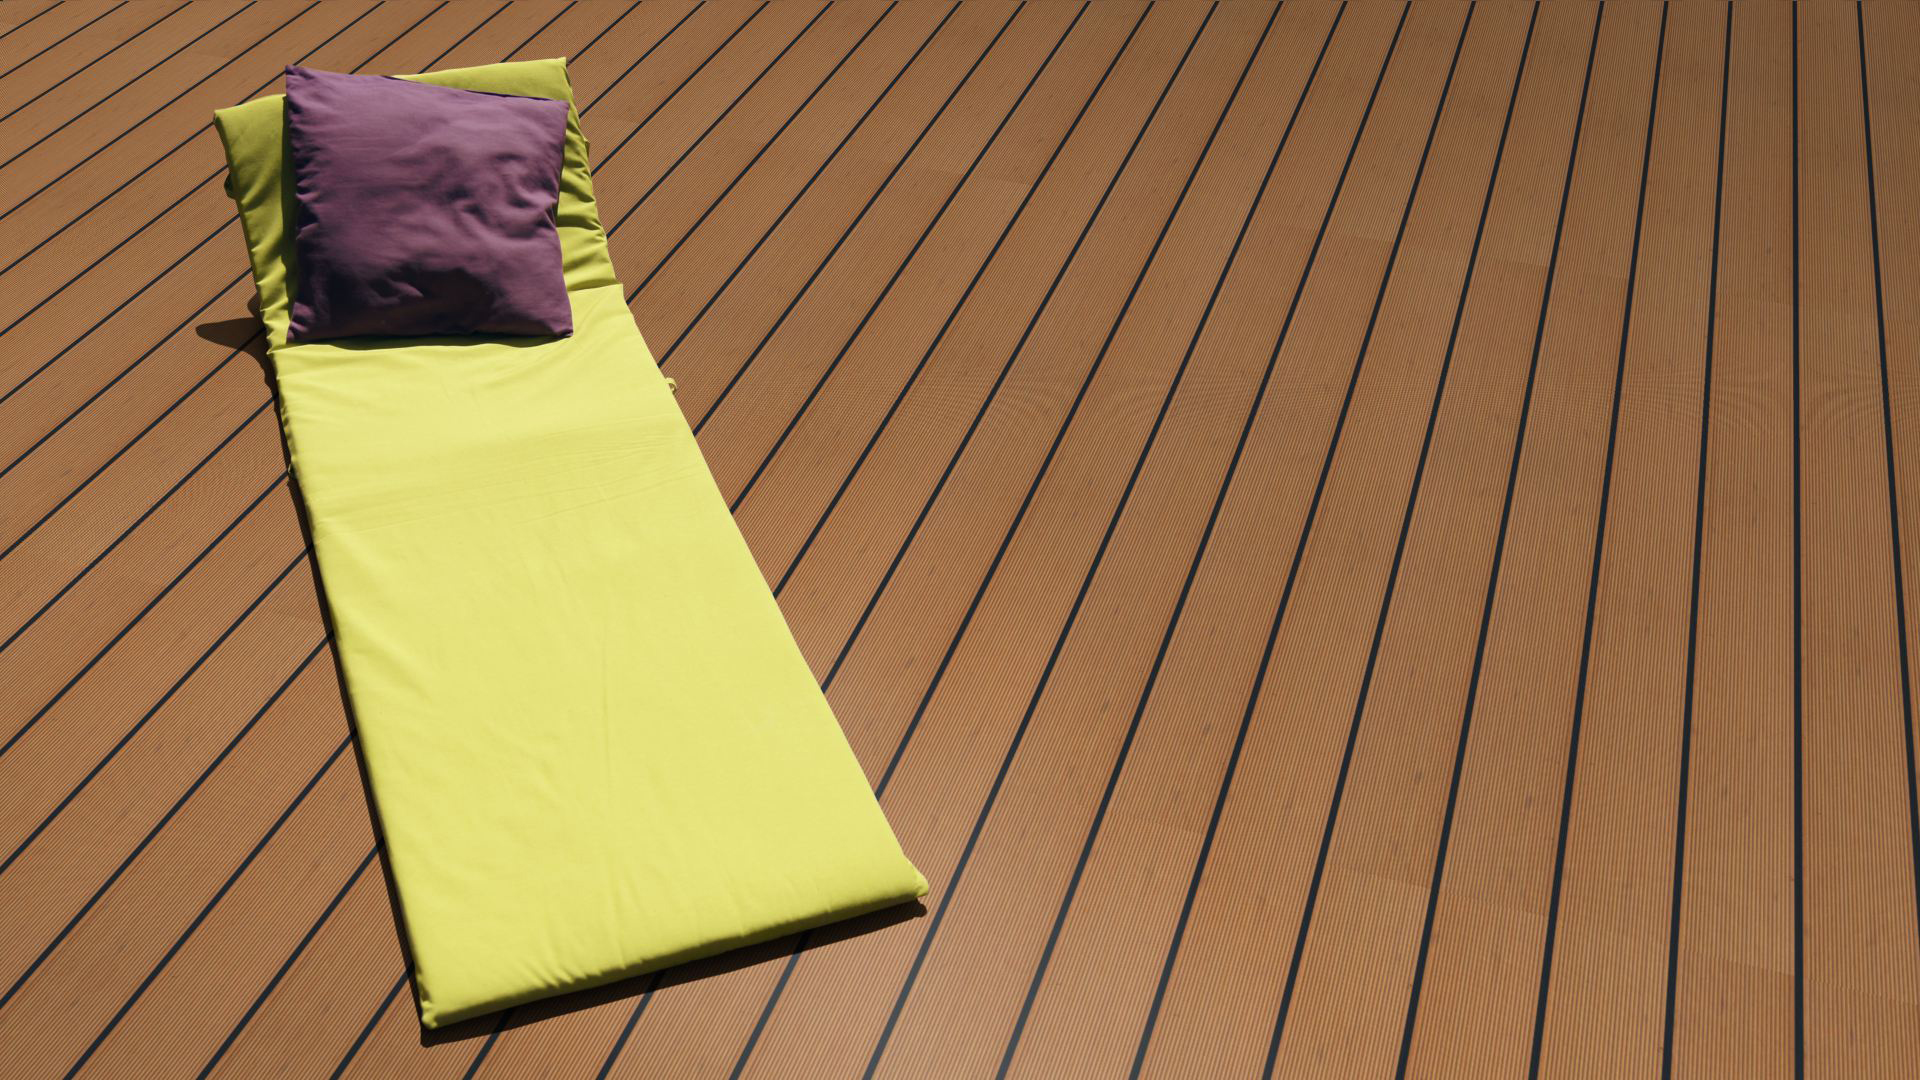 PARAT Deck bangkirai ripple plank 25mm 